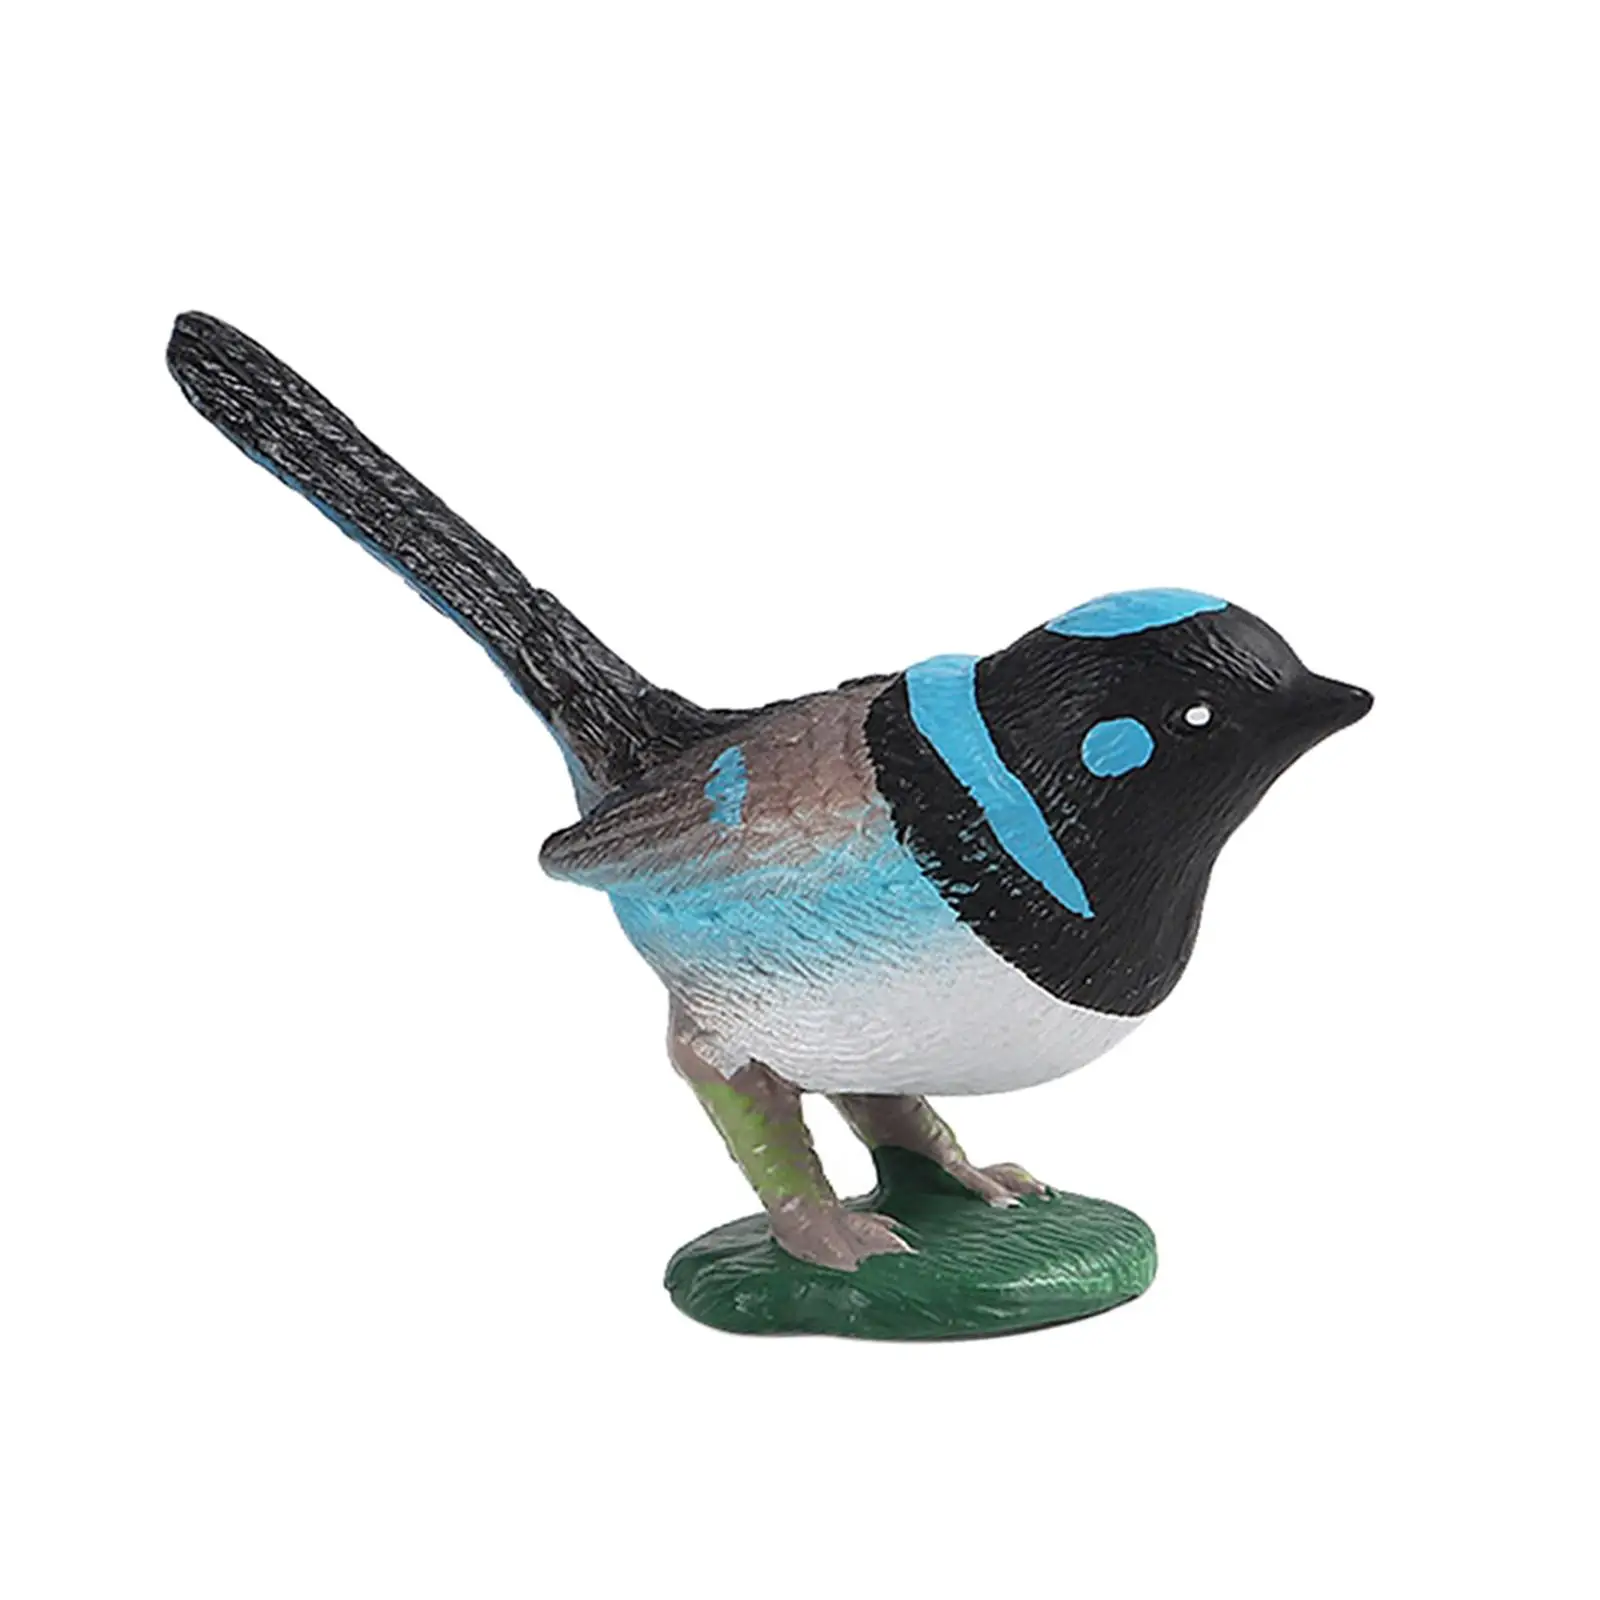 Simulated Bird Figurine Animal Figures Educational Learning Toys Fine Workmanship Ornament for Desktop Garden Patio Lawn Outdoor